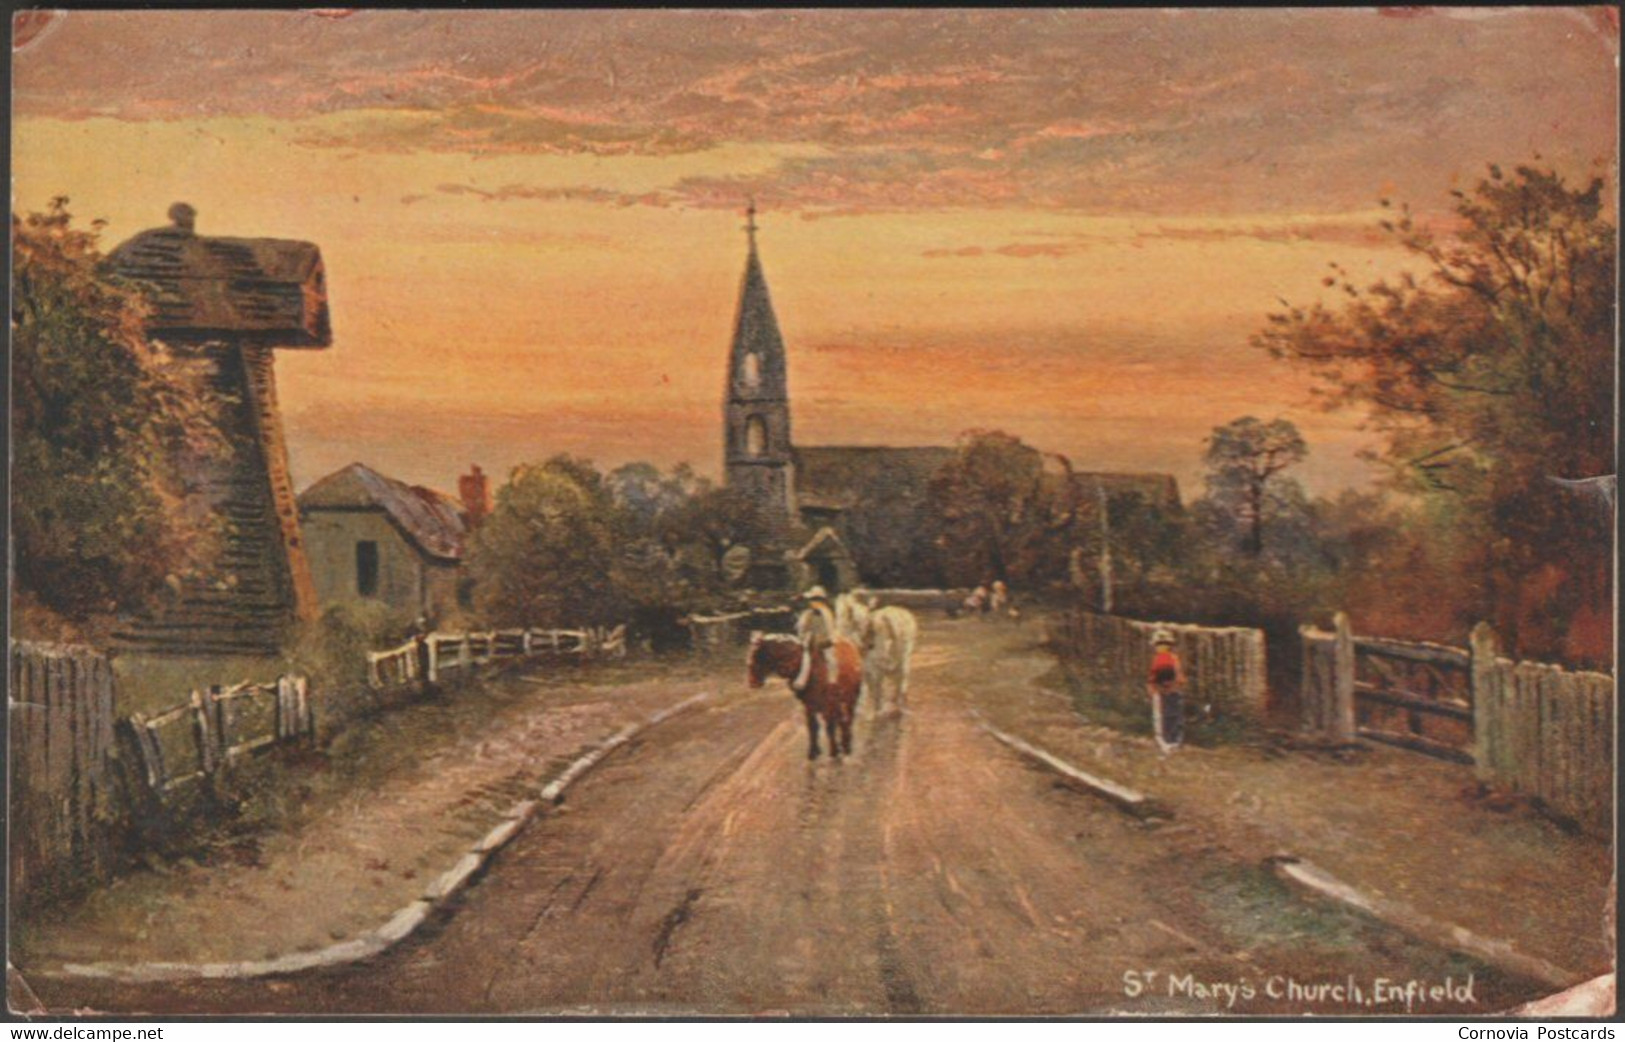 St Mary's Church, Enfield, Middlesex, C.1905-10 - Hildesheimer Postcard - Middlesex